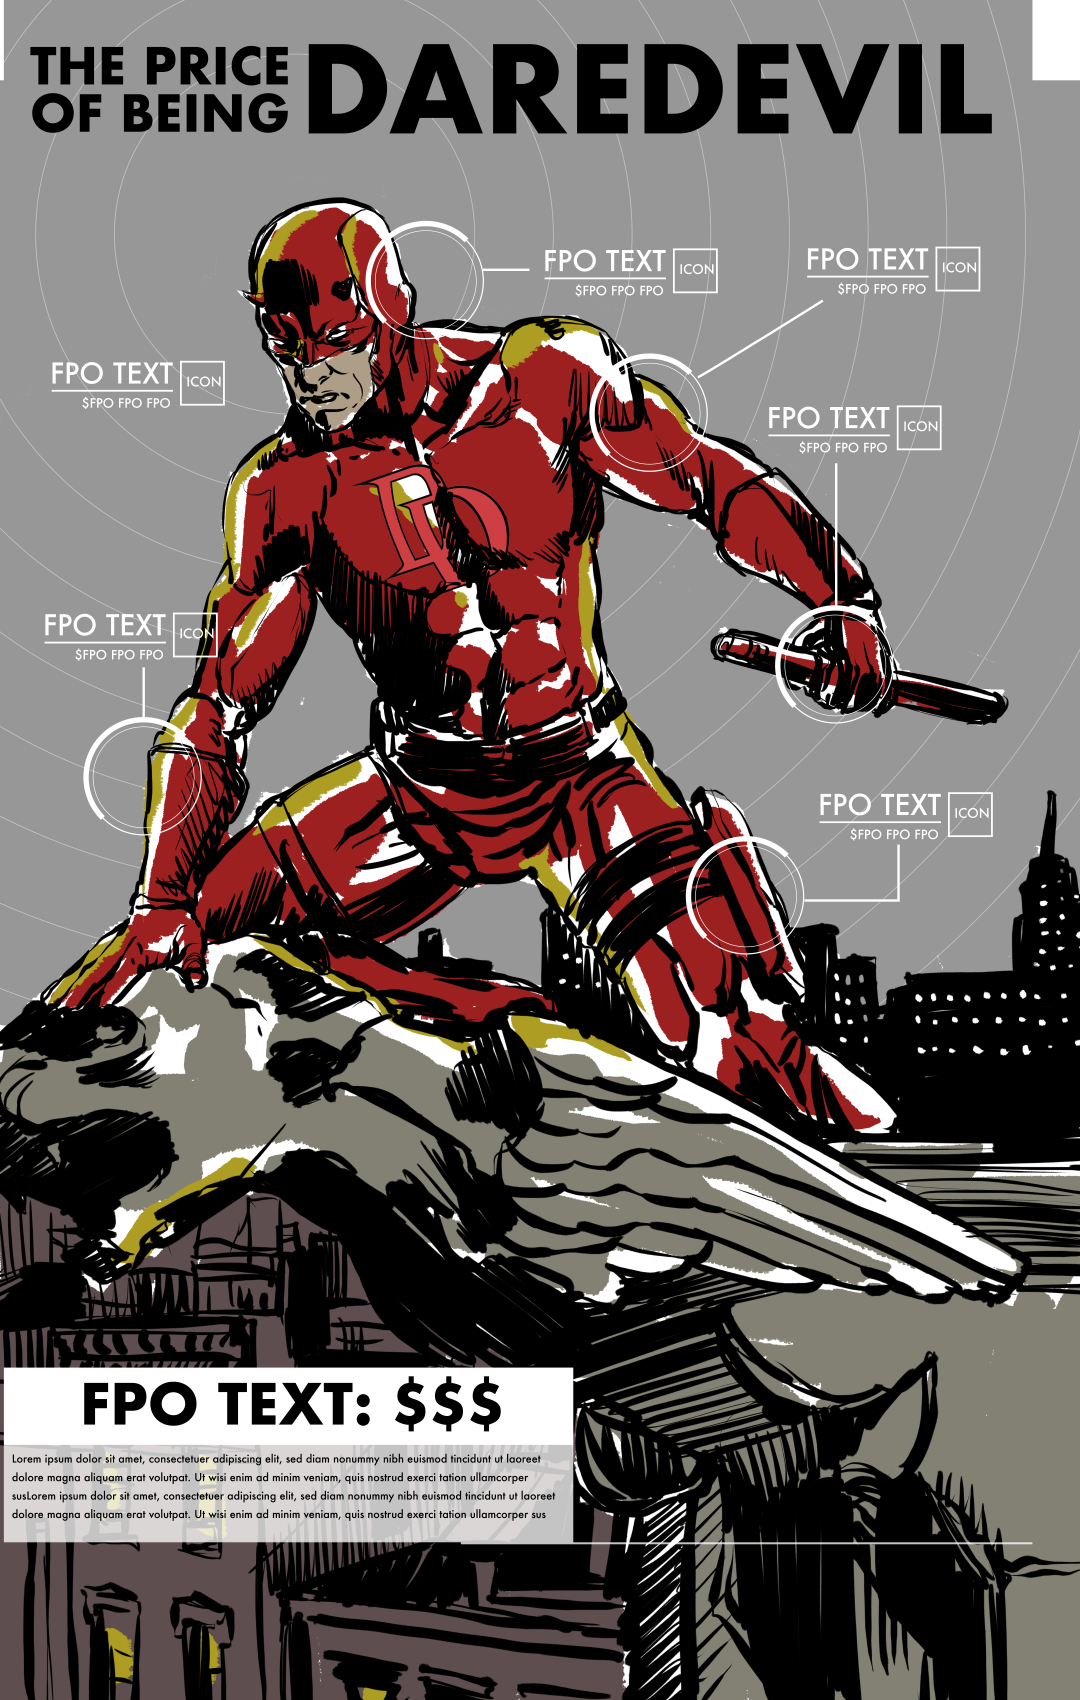 marvel spiderman Daredevil SuperHero comics Comic Illustration character art